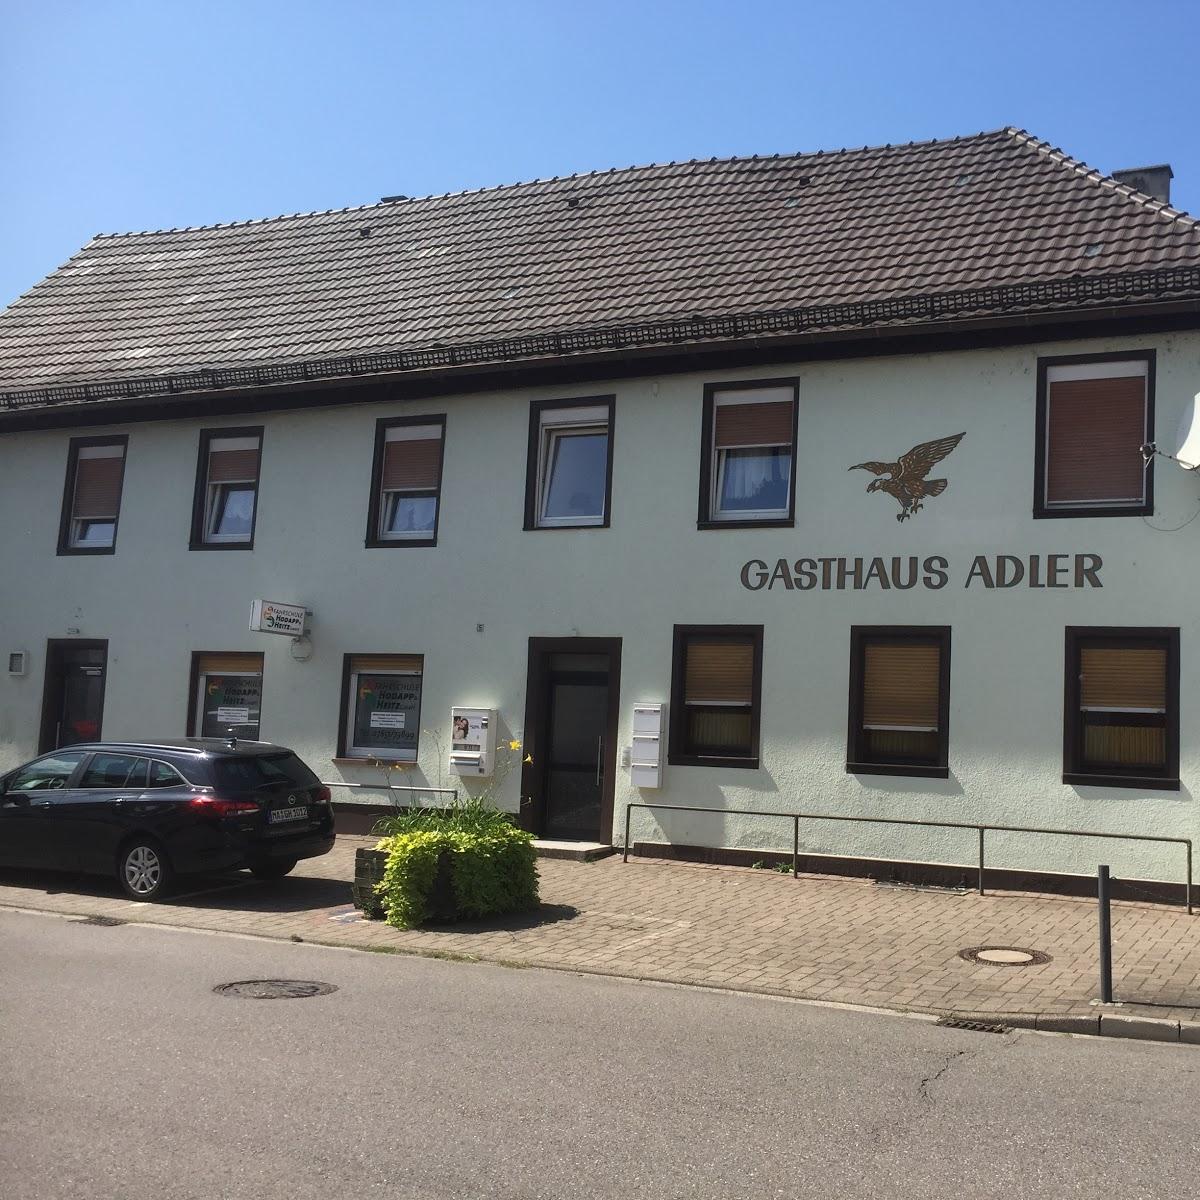 Restaurant "Adler" in Rheinau